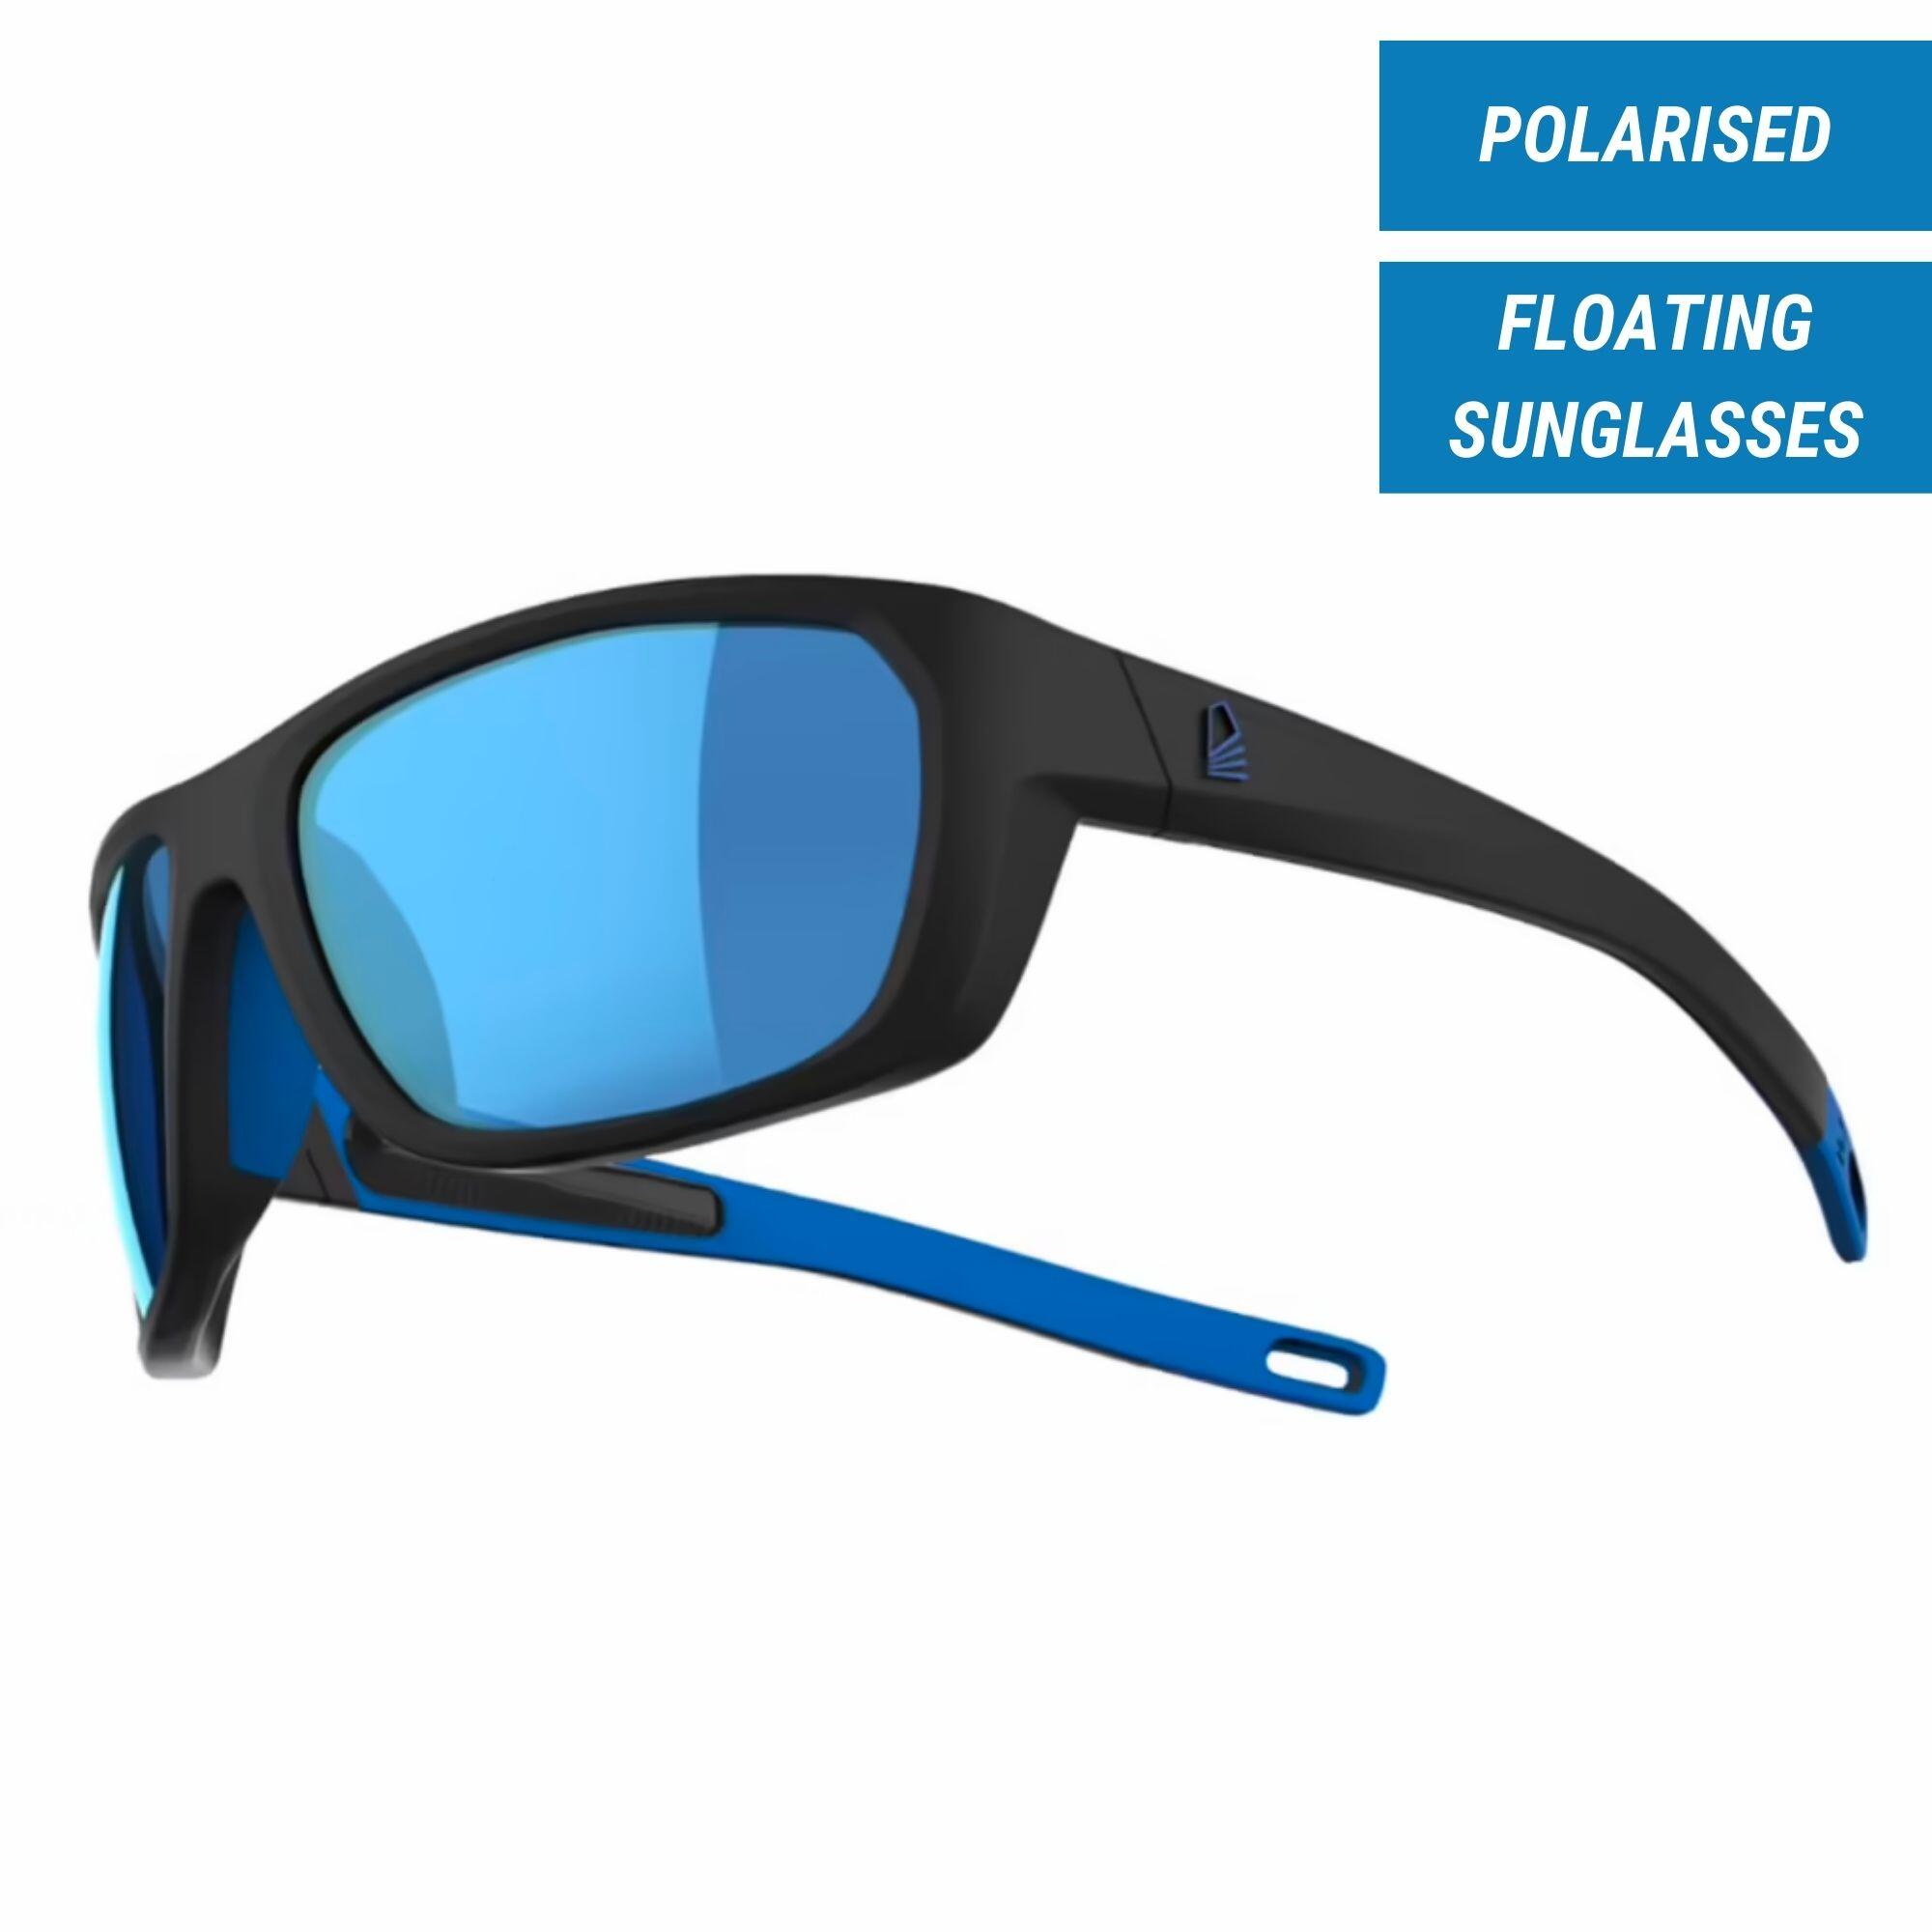 Adult Sailing Floating Polarised Sunglasses 500 - Size M Black 1/12